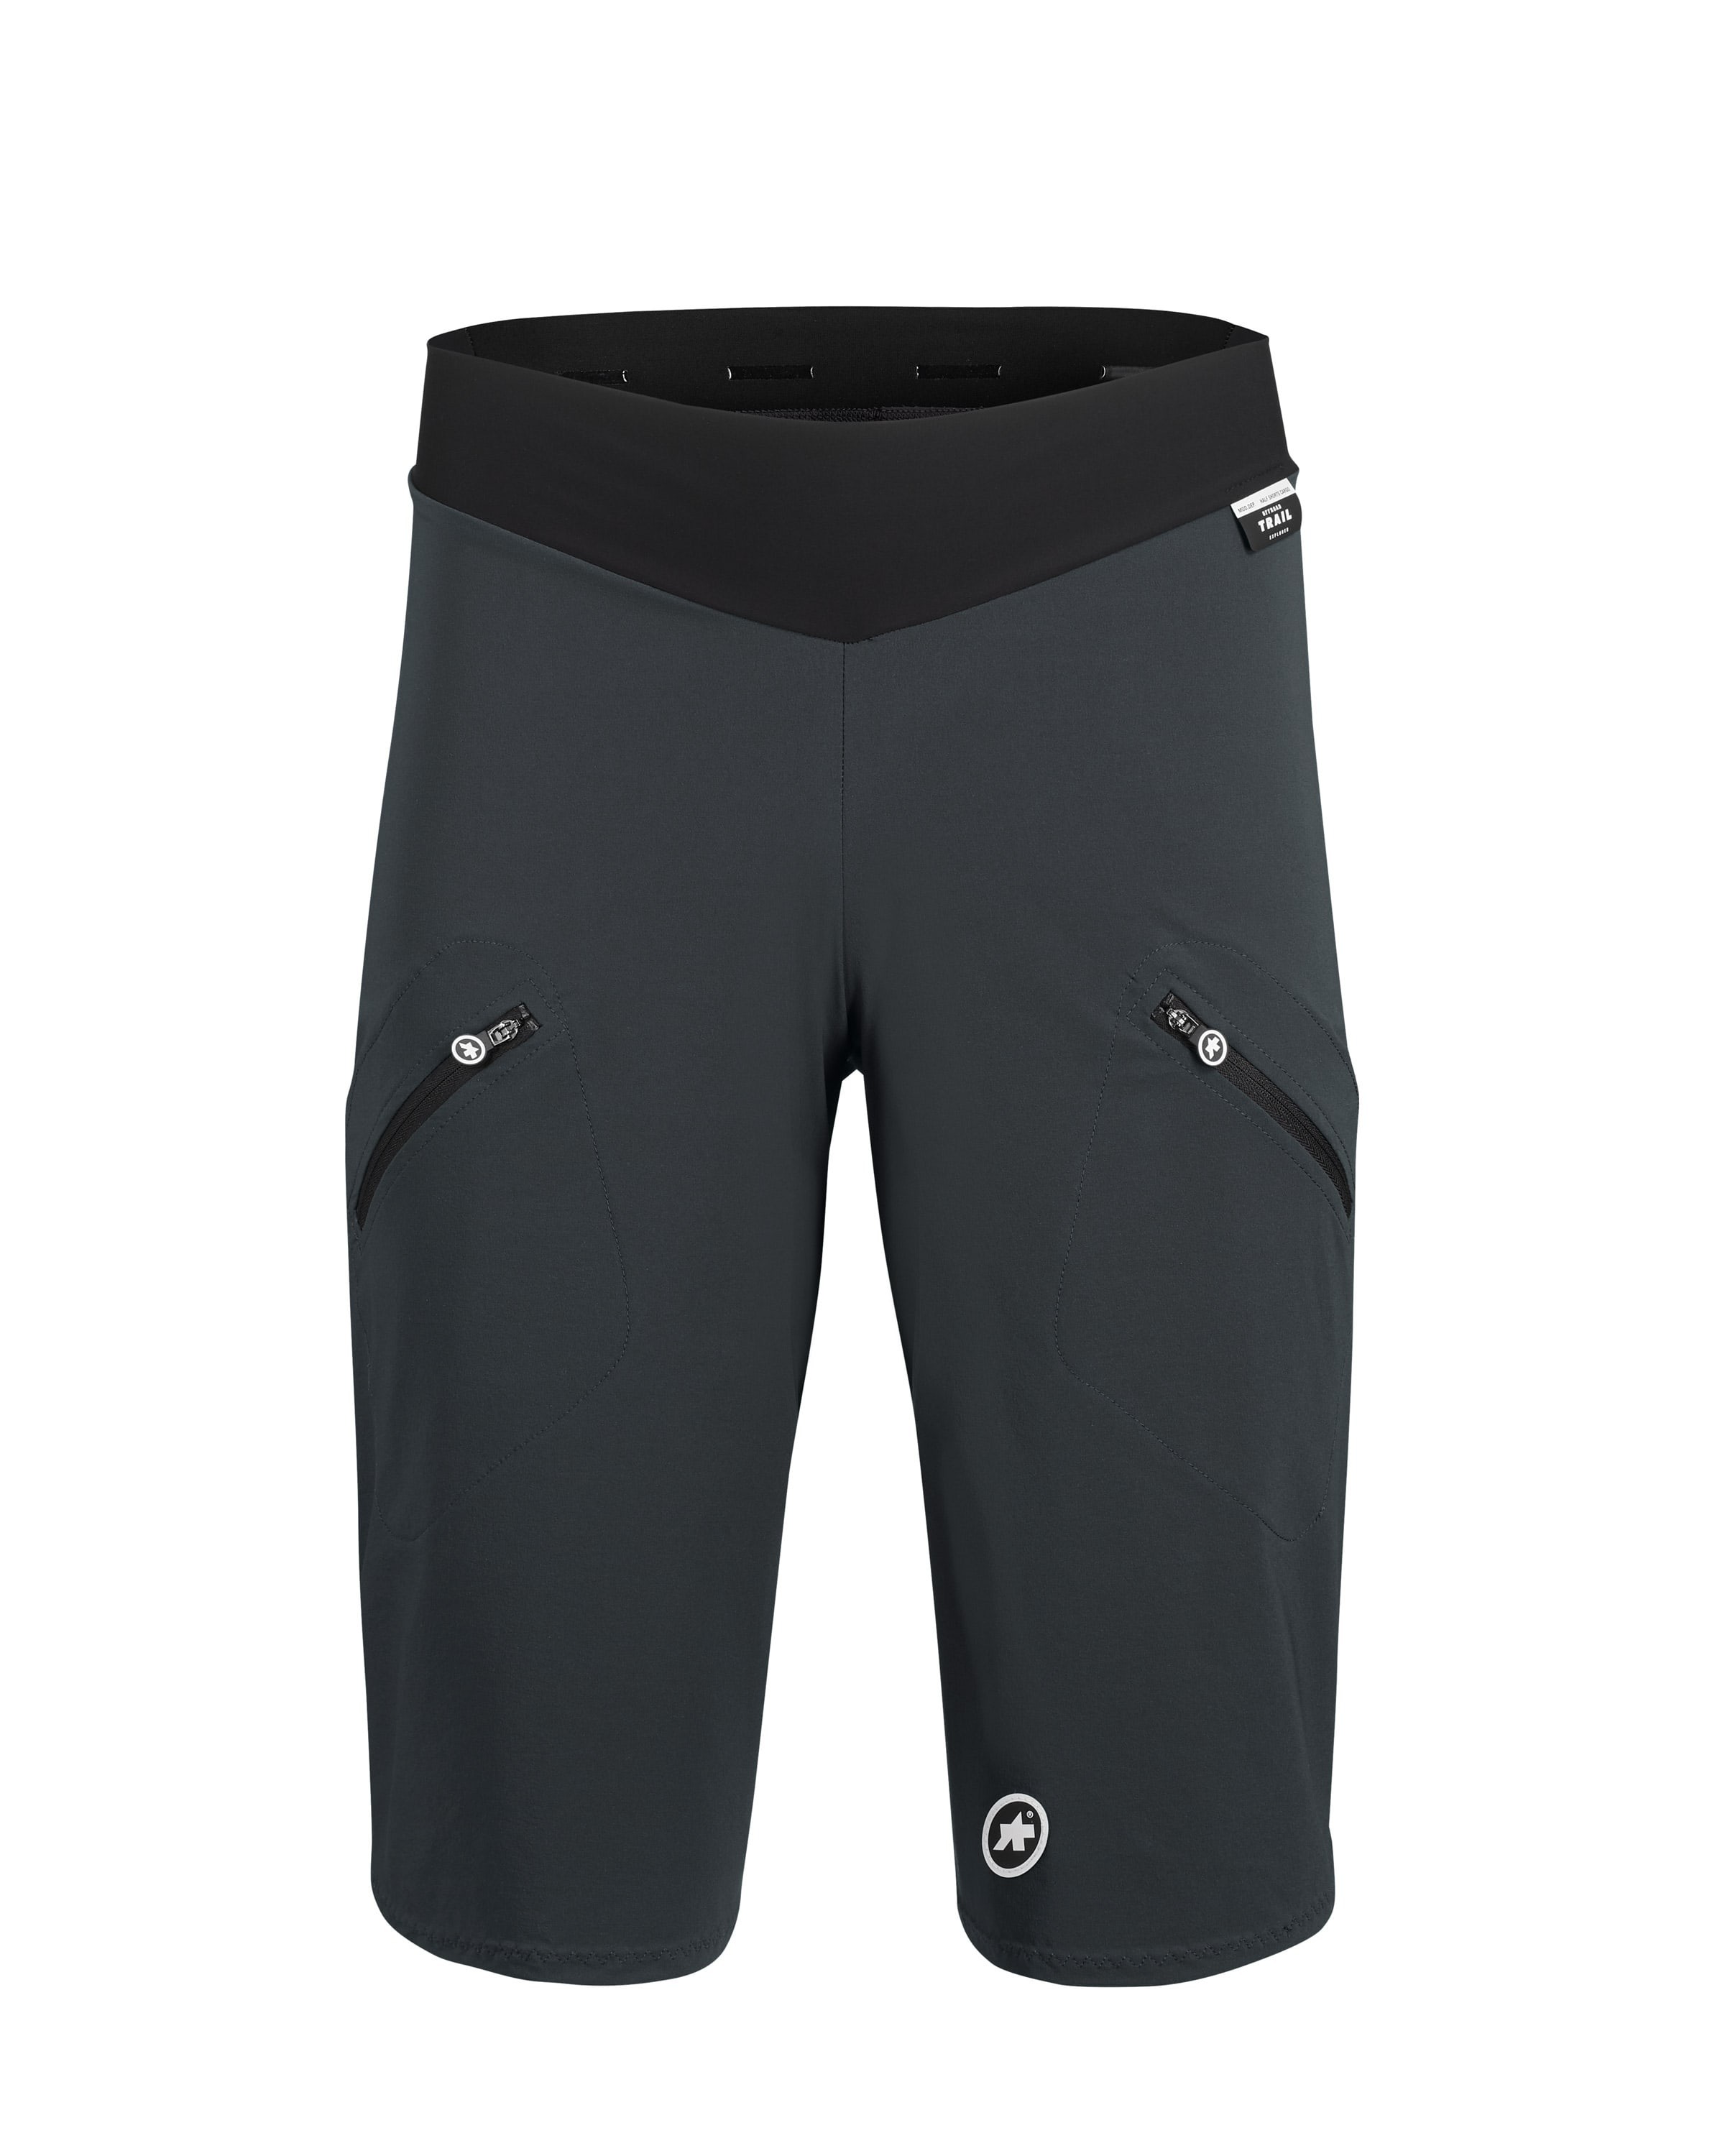 Assos Trail Cargo Shorts - MTB shorts - Men's